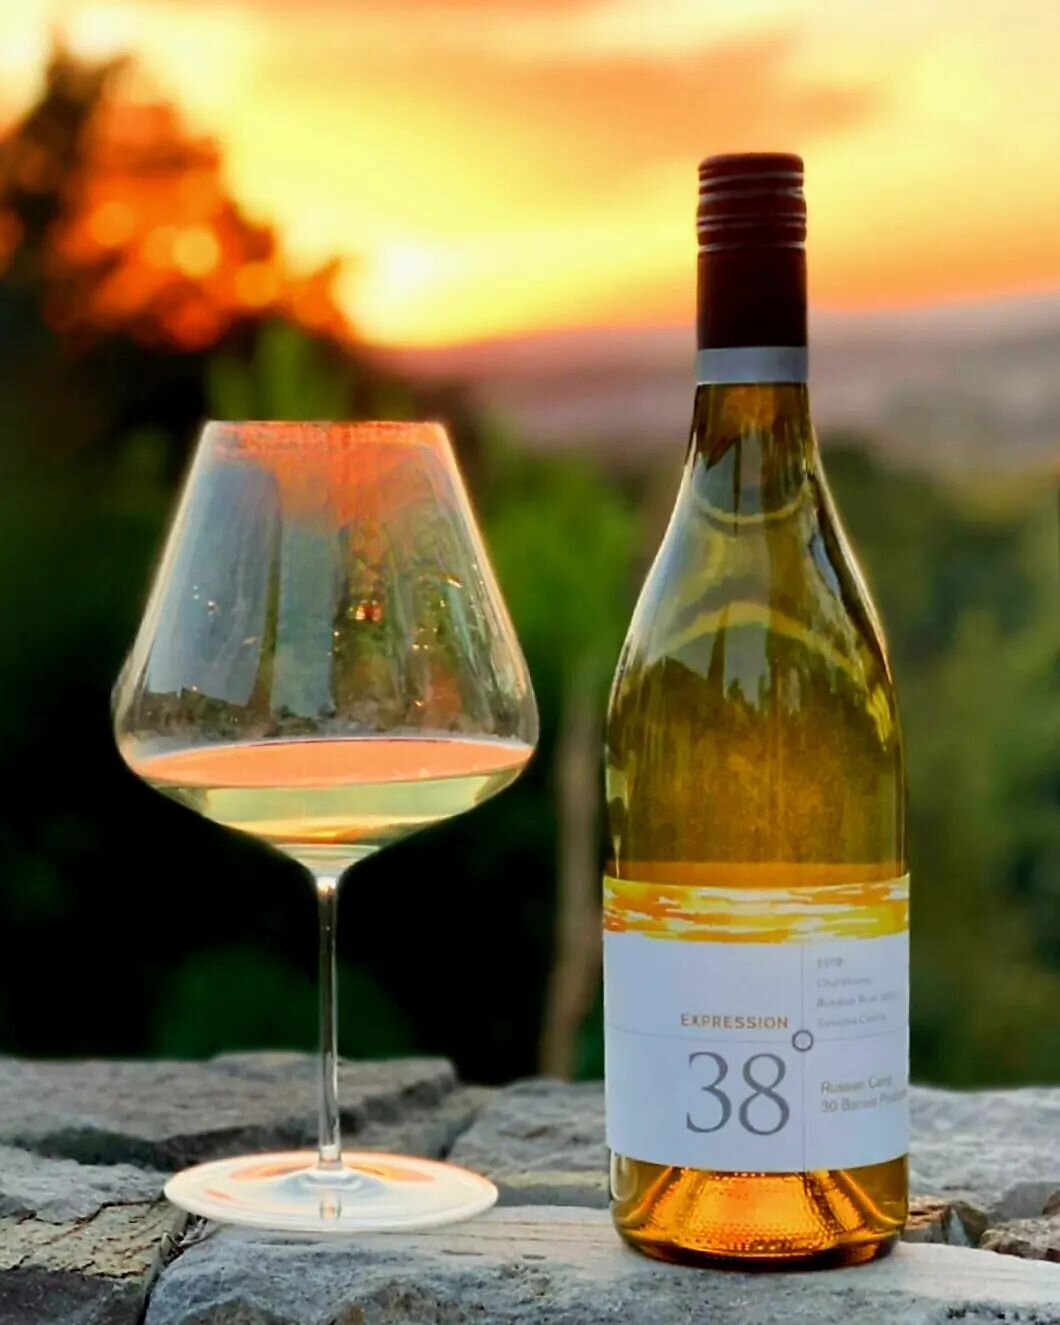 Catching that sunset 🌅❤️🥂

📸@elizabethrobertis
#chardonnay #wine #winetasting #dinner #sunset #goldenhour #cheers #view